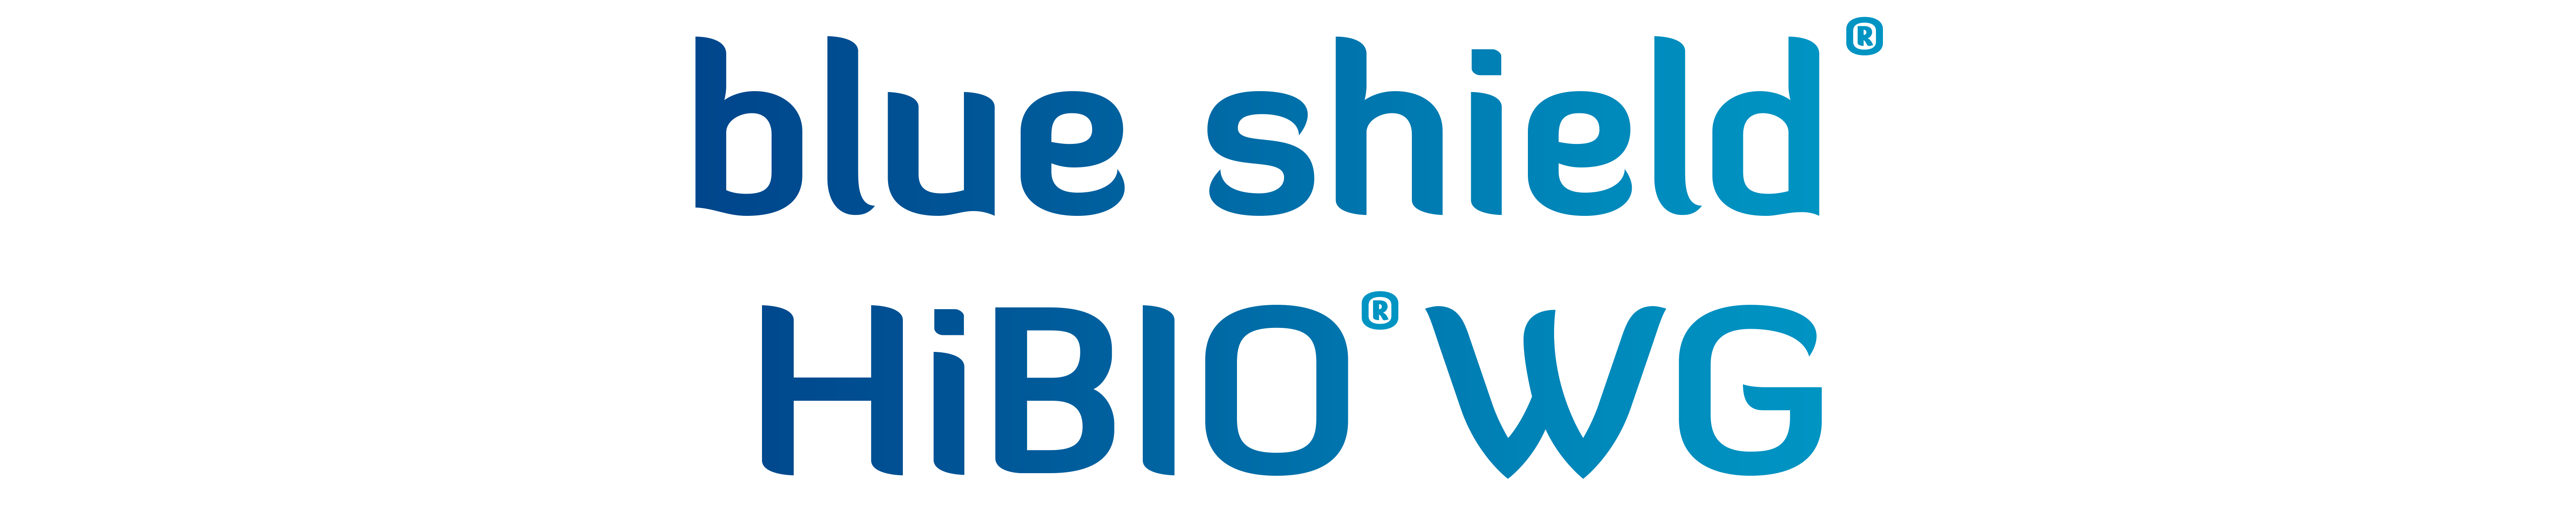 Blue shield HiBIO WG - Site internet